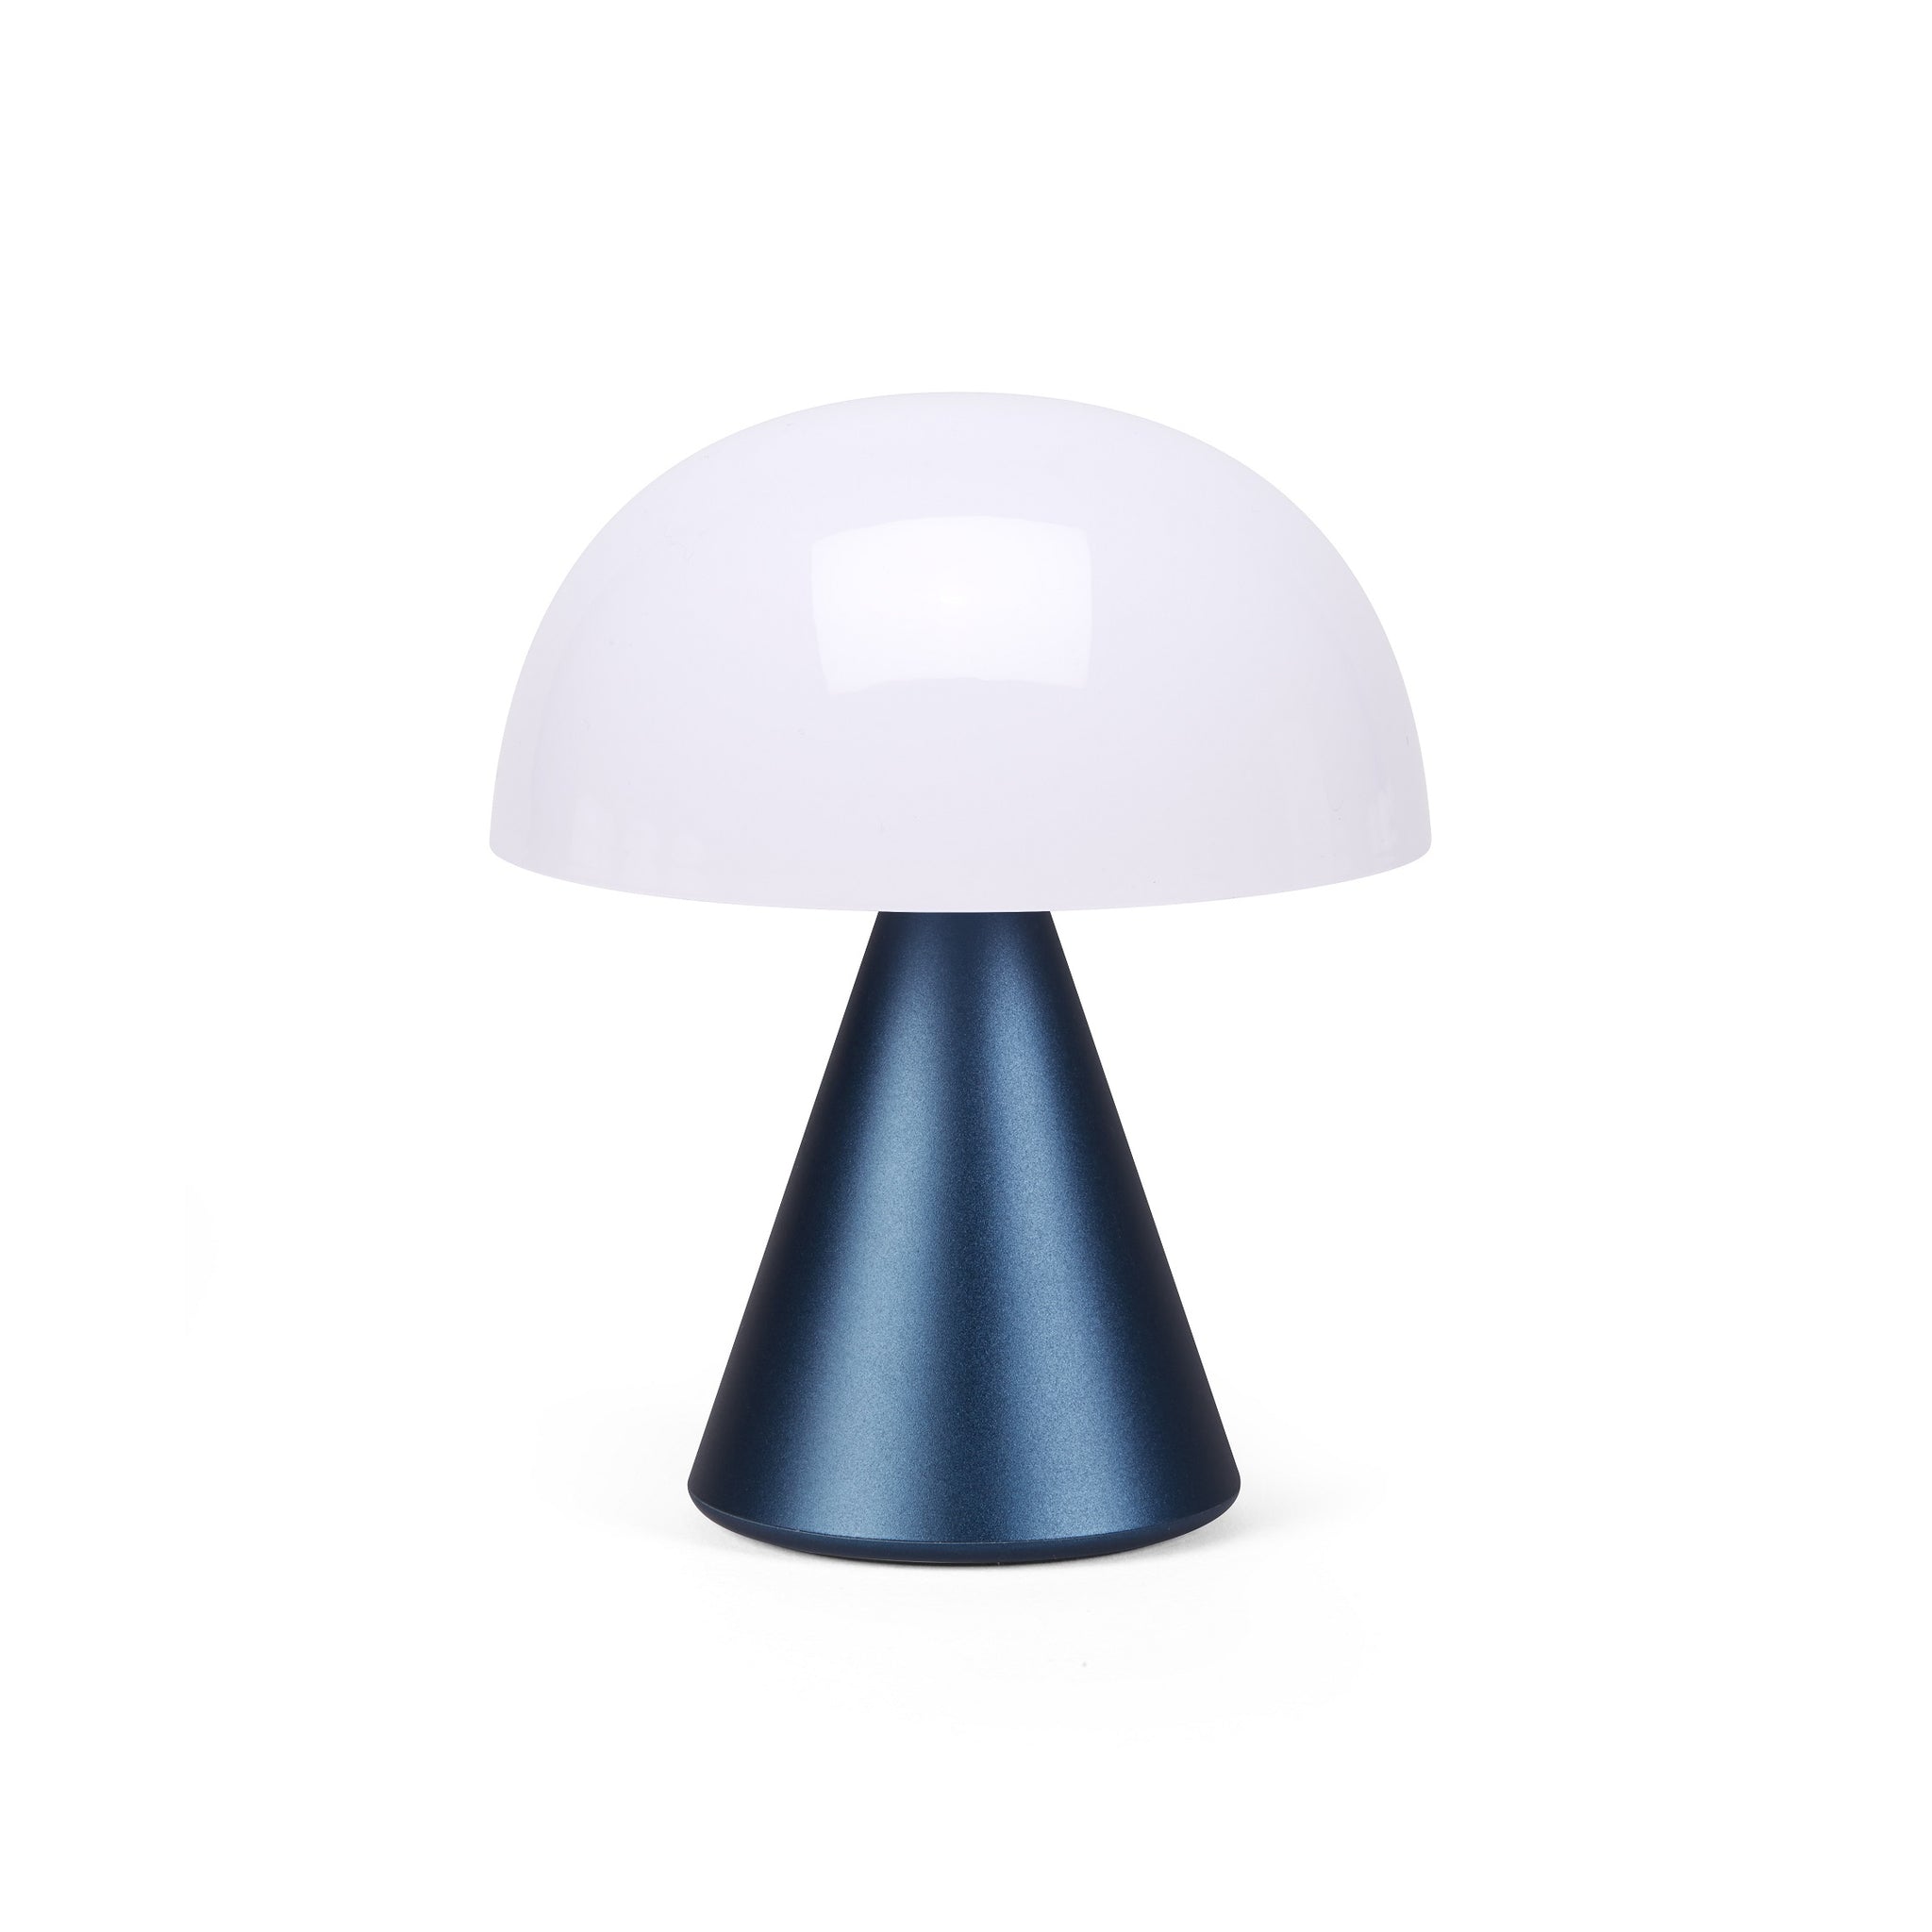 Lexon Mina Medium Donkerblauw│Oplaadbare LED-lamp│art. LH64MDB│licht uit met witte achtergrond